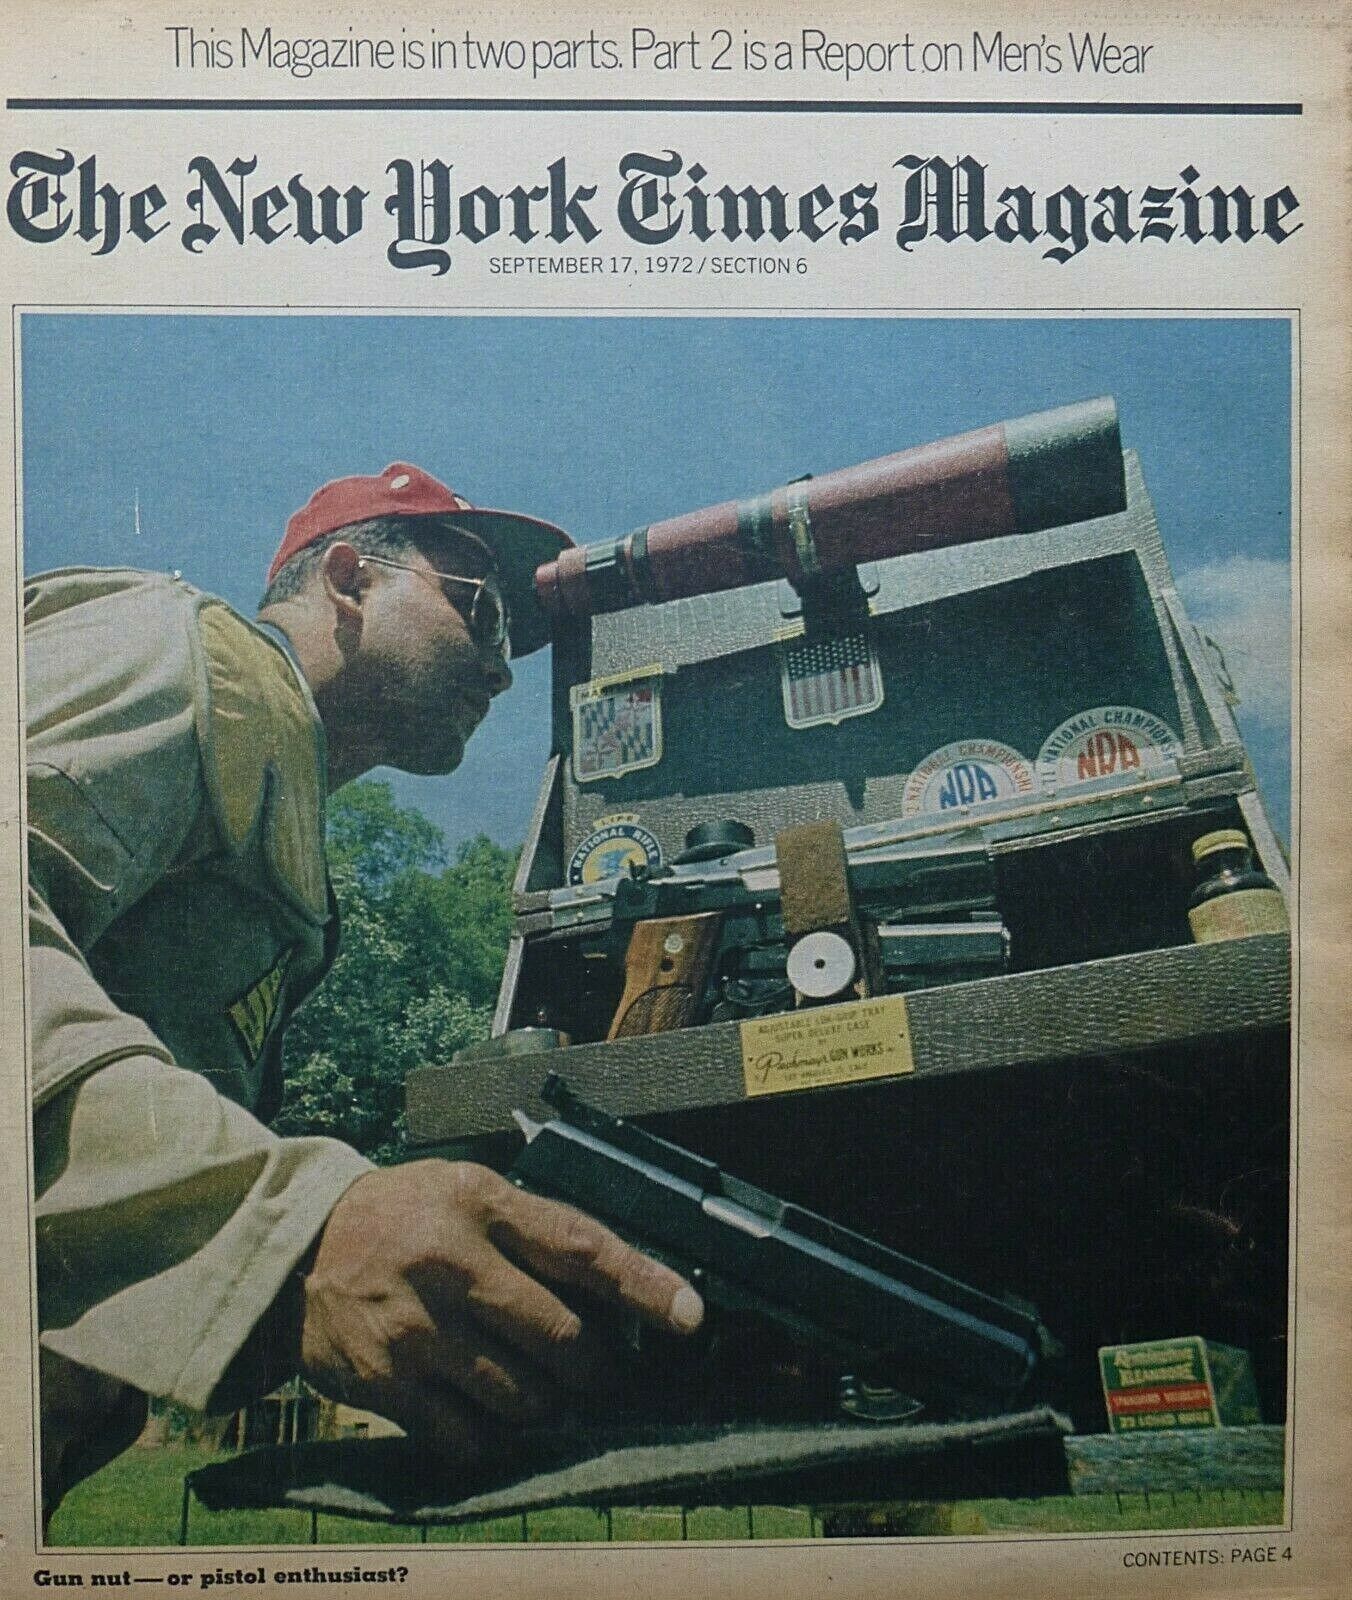 PISTOL GUN ORANGE PRISON JESSUP WBAI RADIO MAO NIXON September 17 1972 NY Times